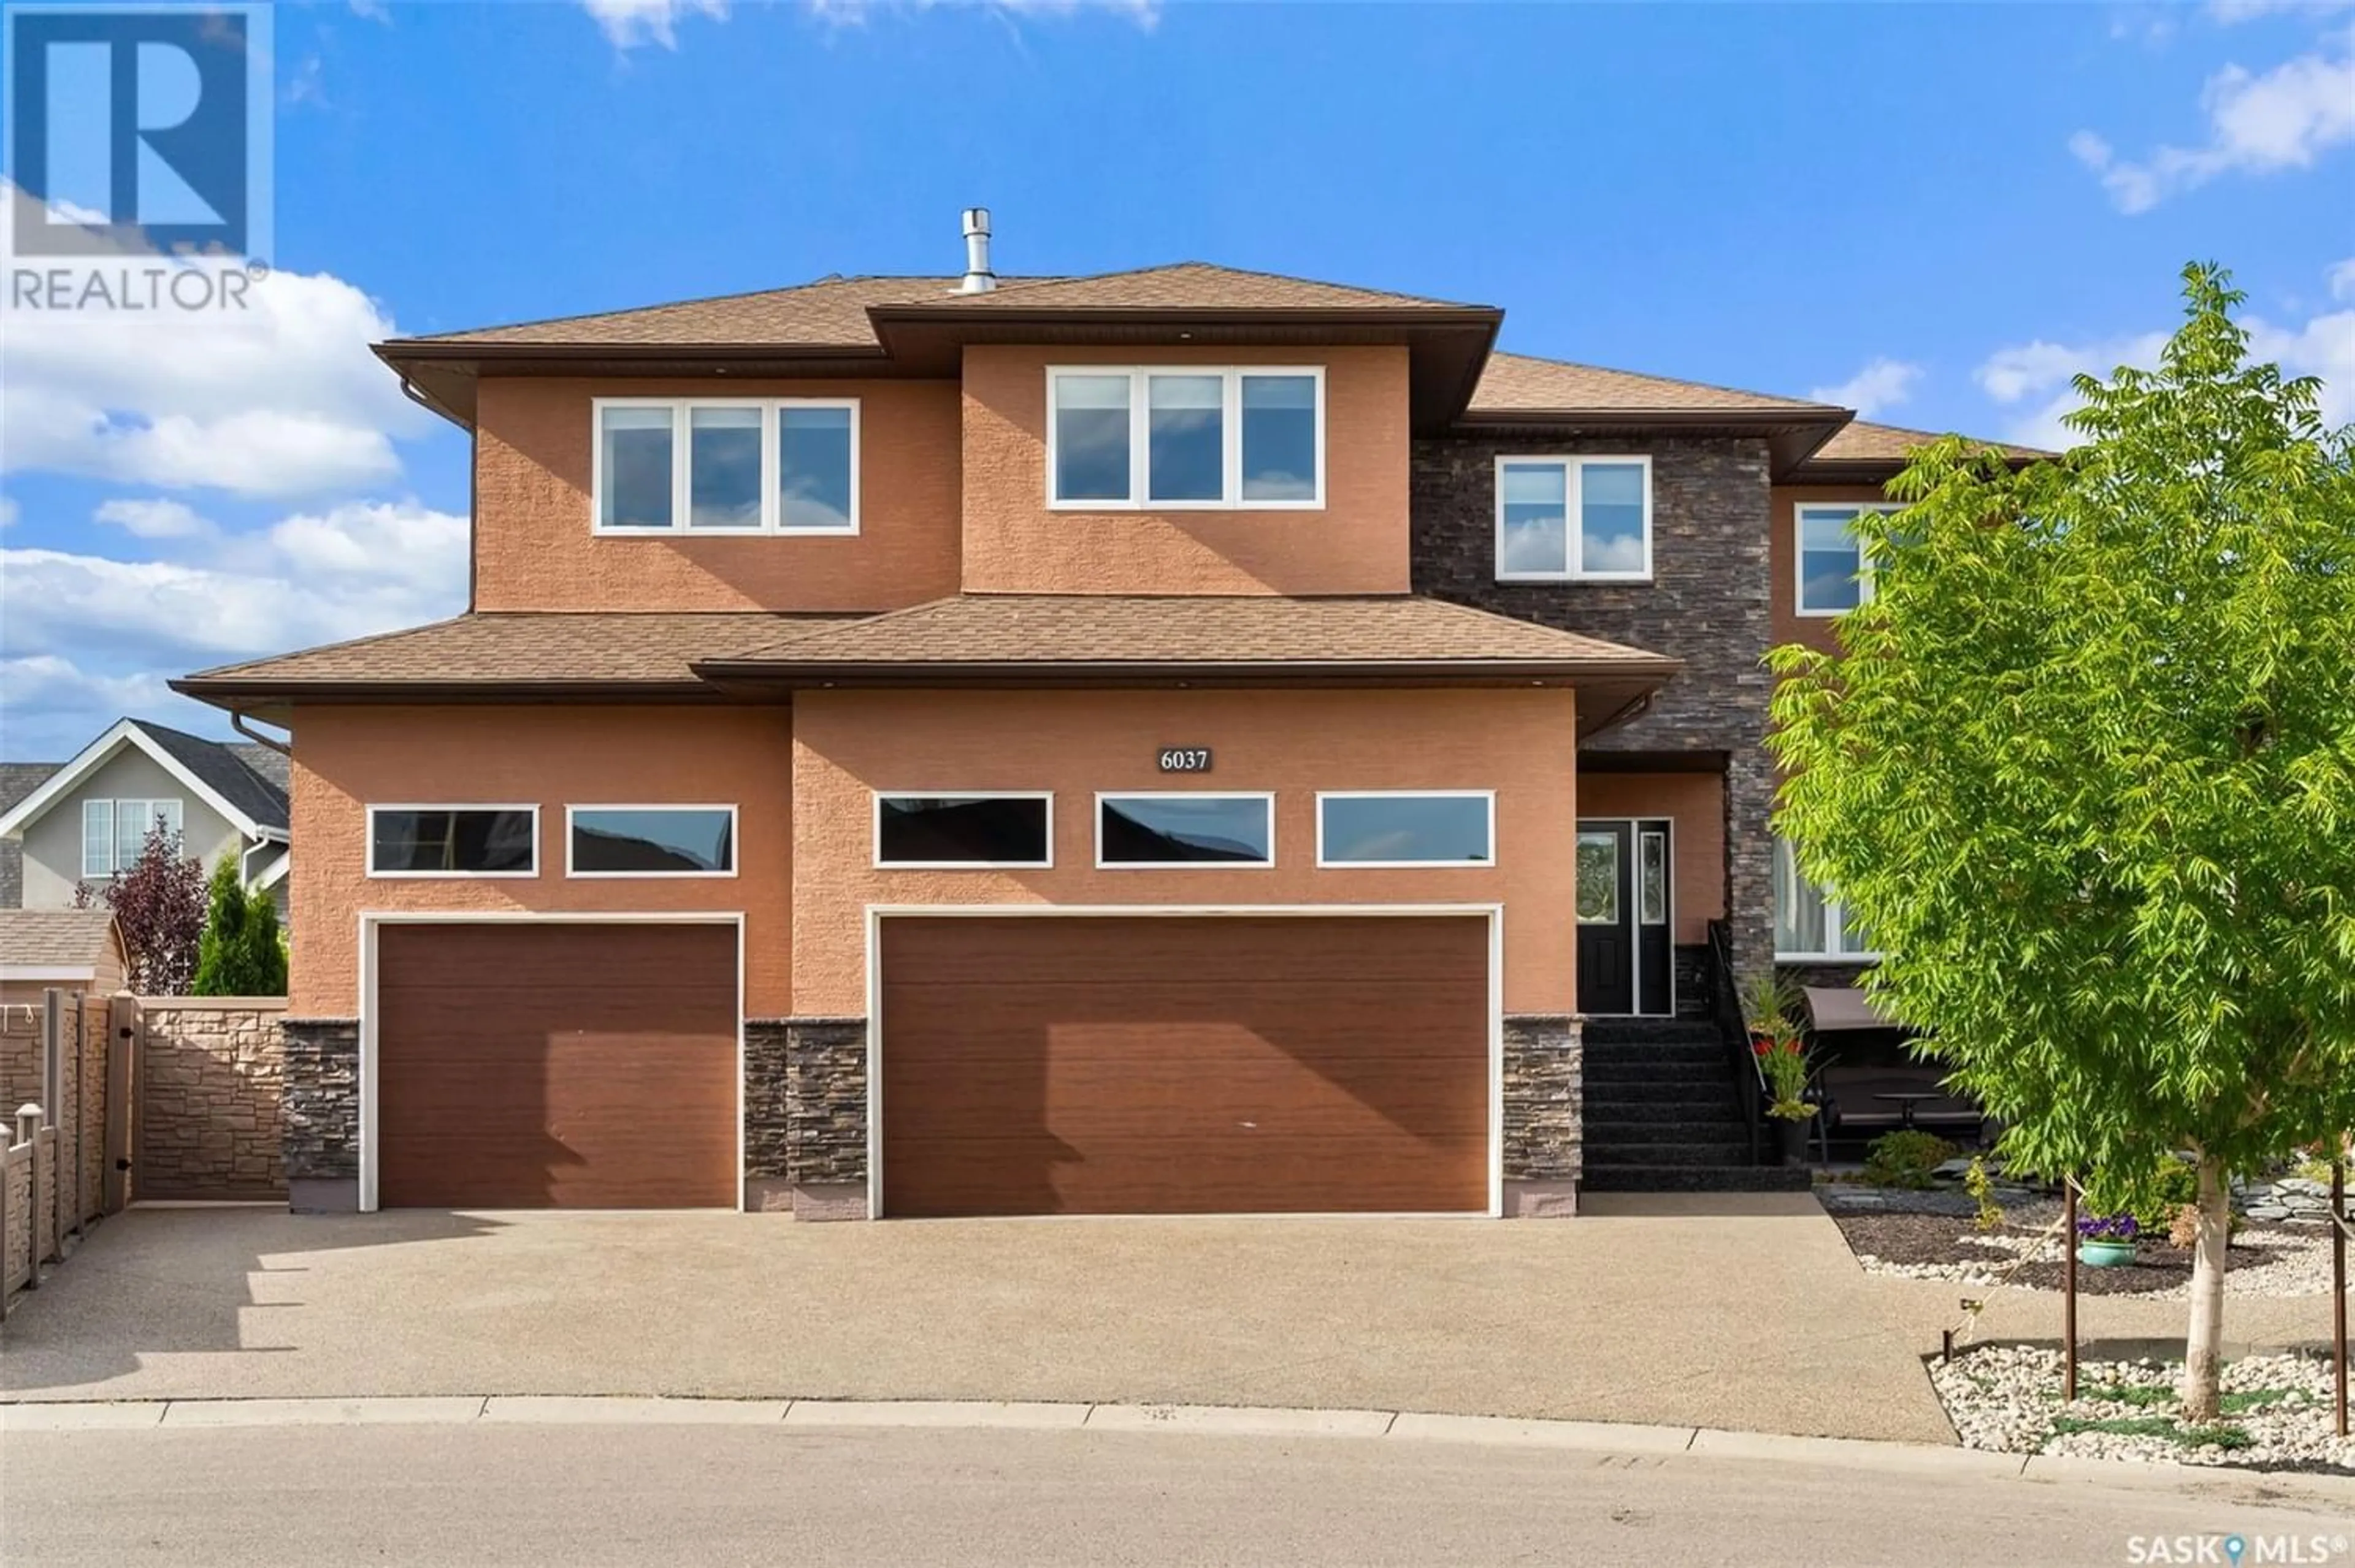 Home with brick exterior material for 6037 Eagles COVE, Regina Saskatchewan S4X0H5